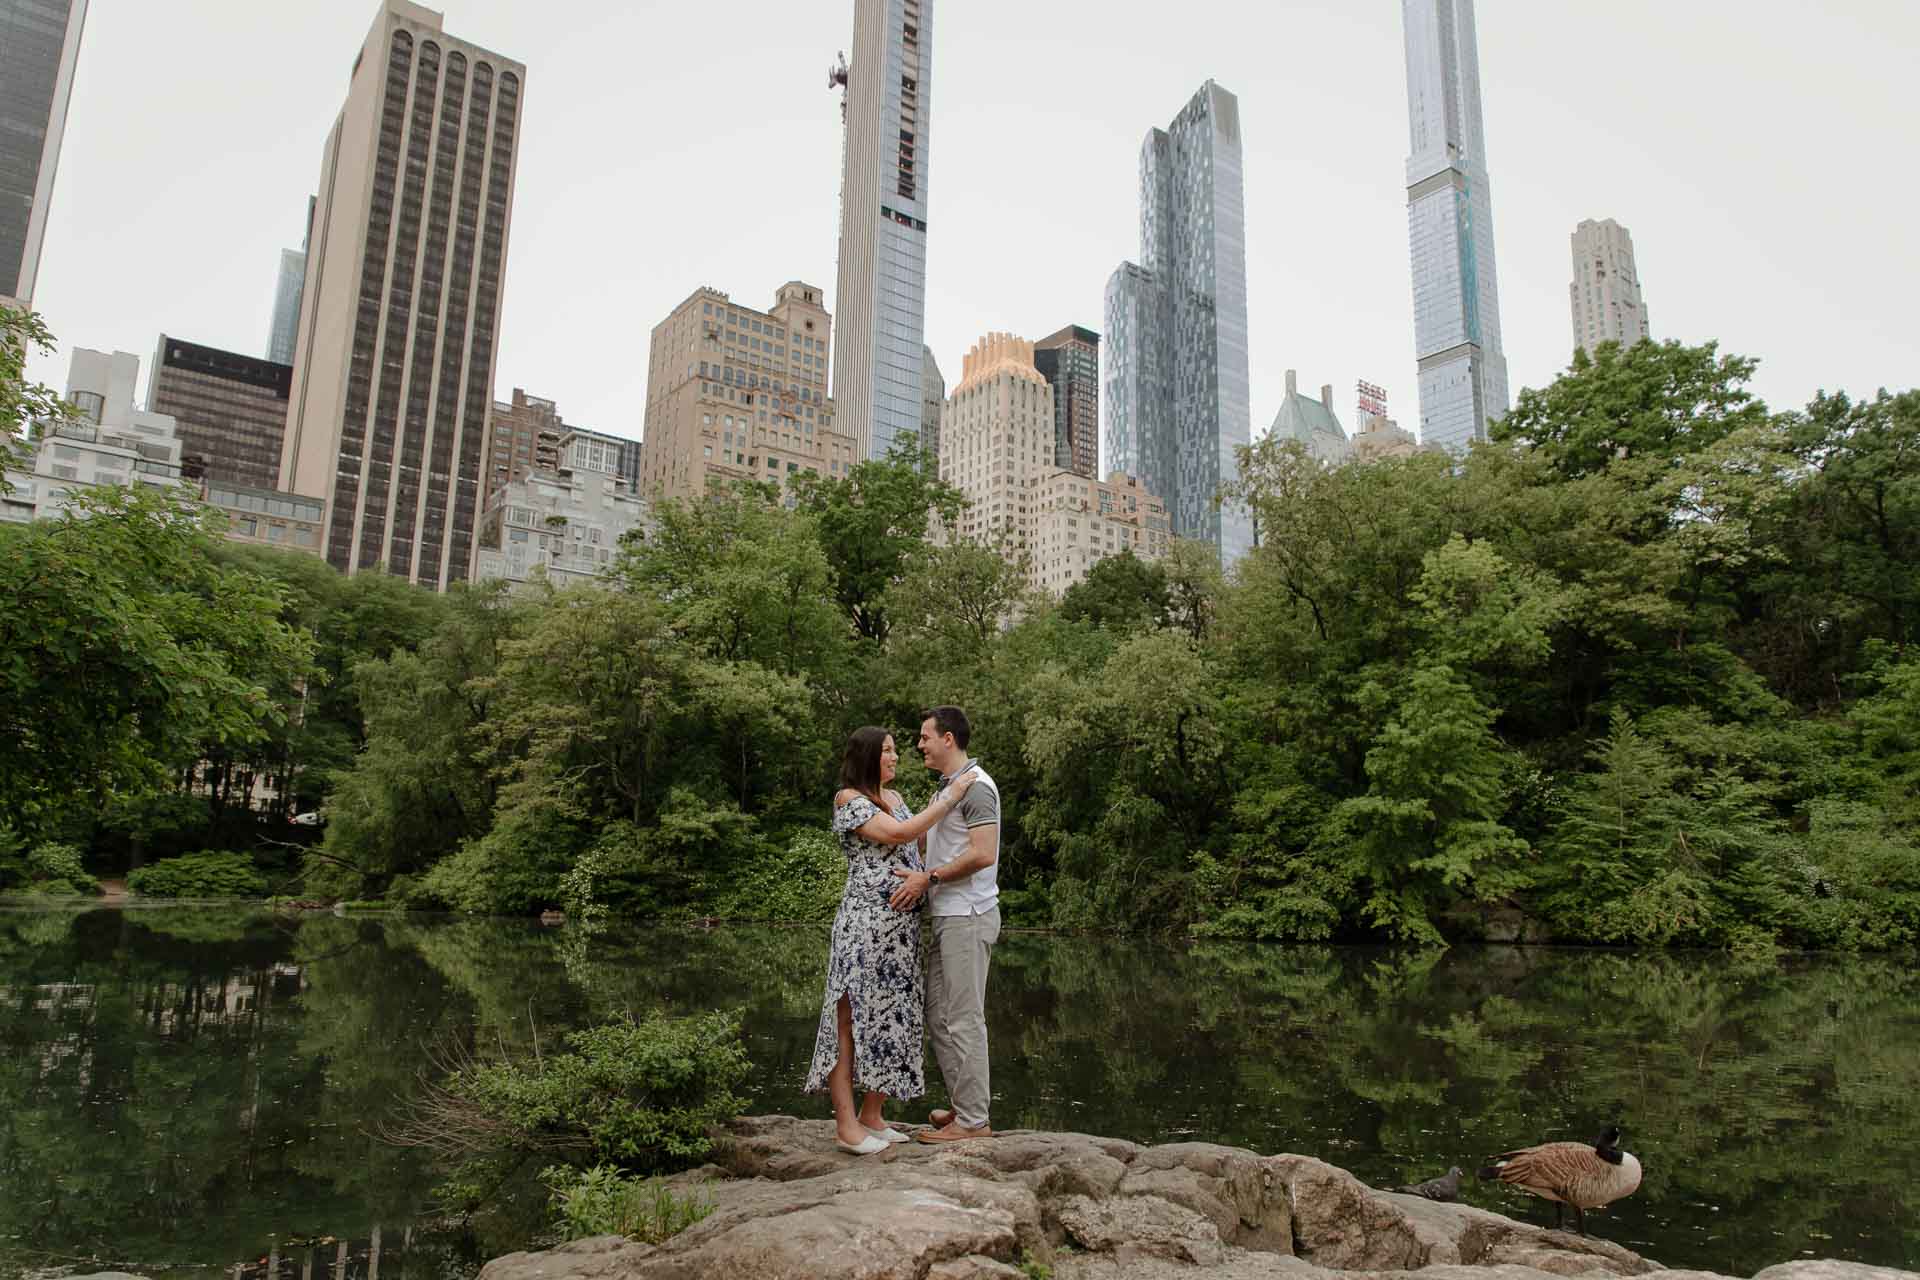 pregnancy photo session in central park, new york